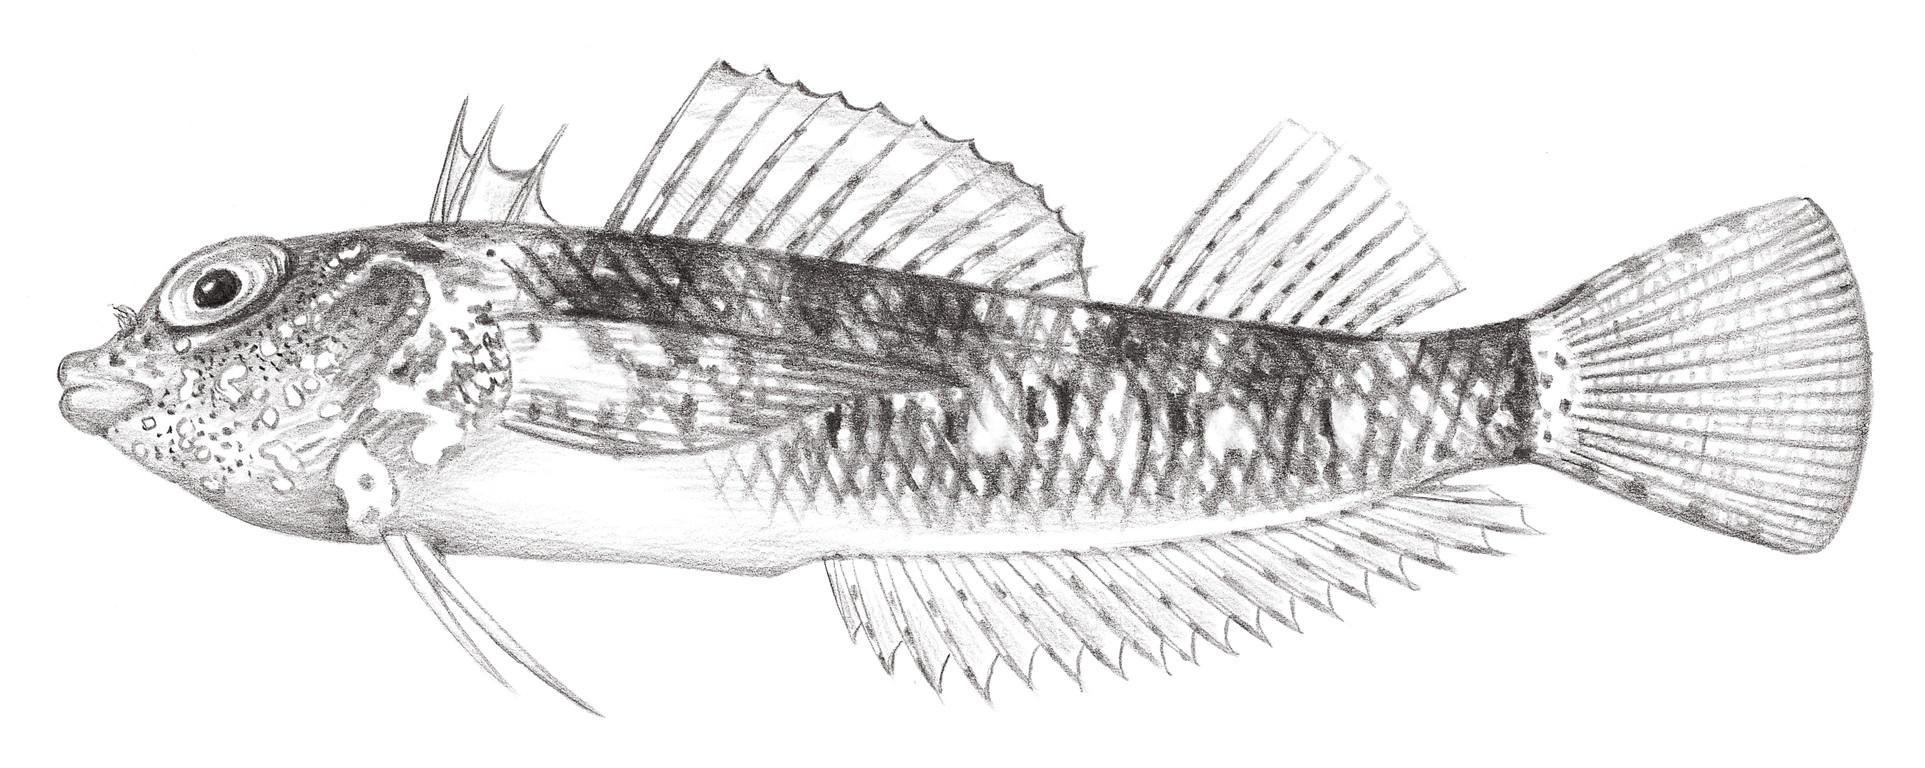 1928.	白點九鰭鳚 Enneapterygius leucopunctatus Shen & Wu, 1994